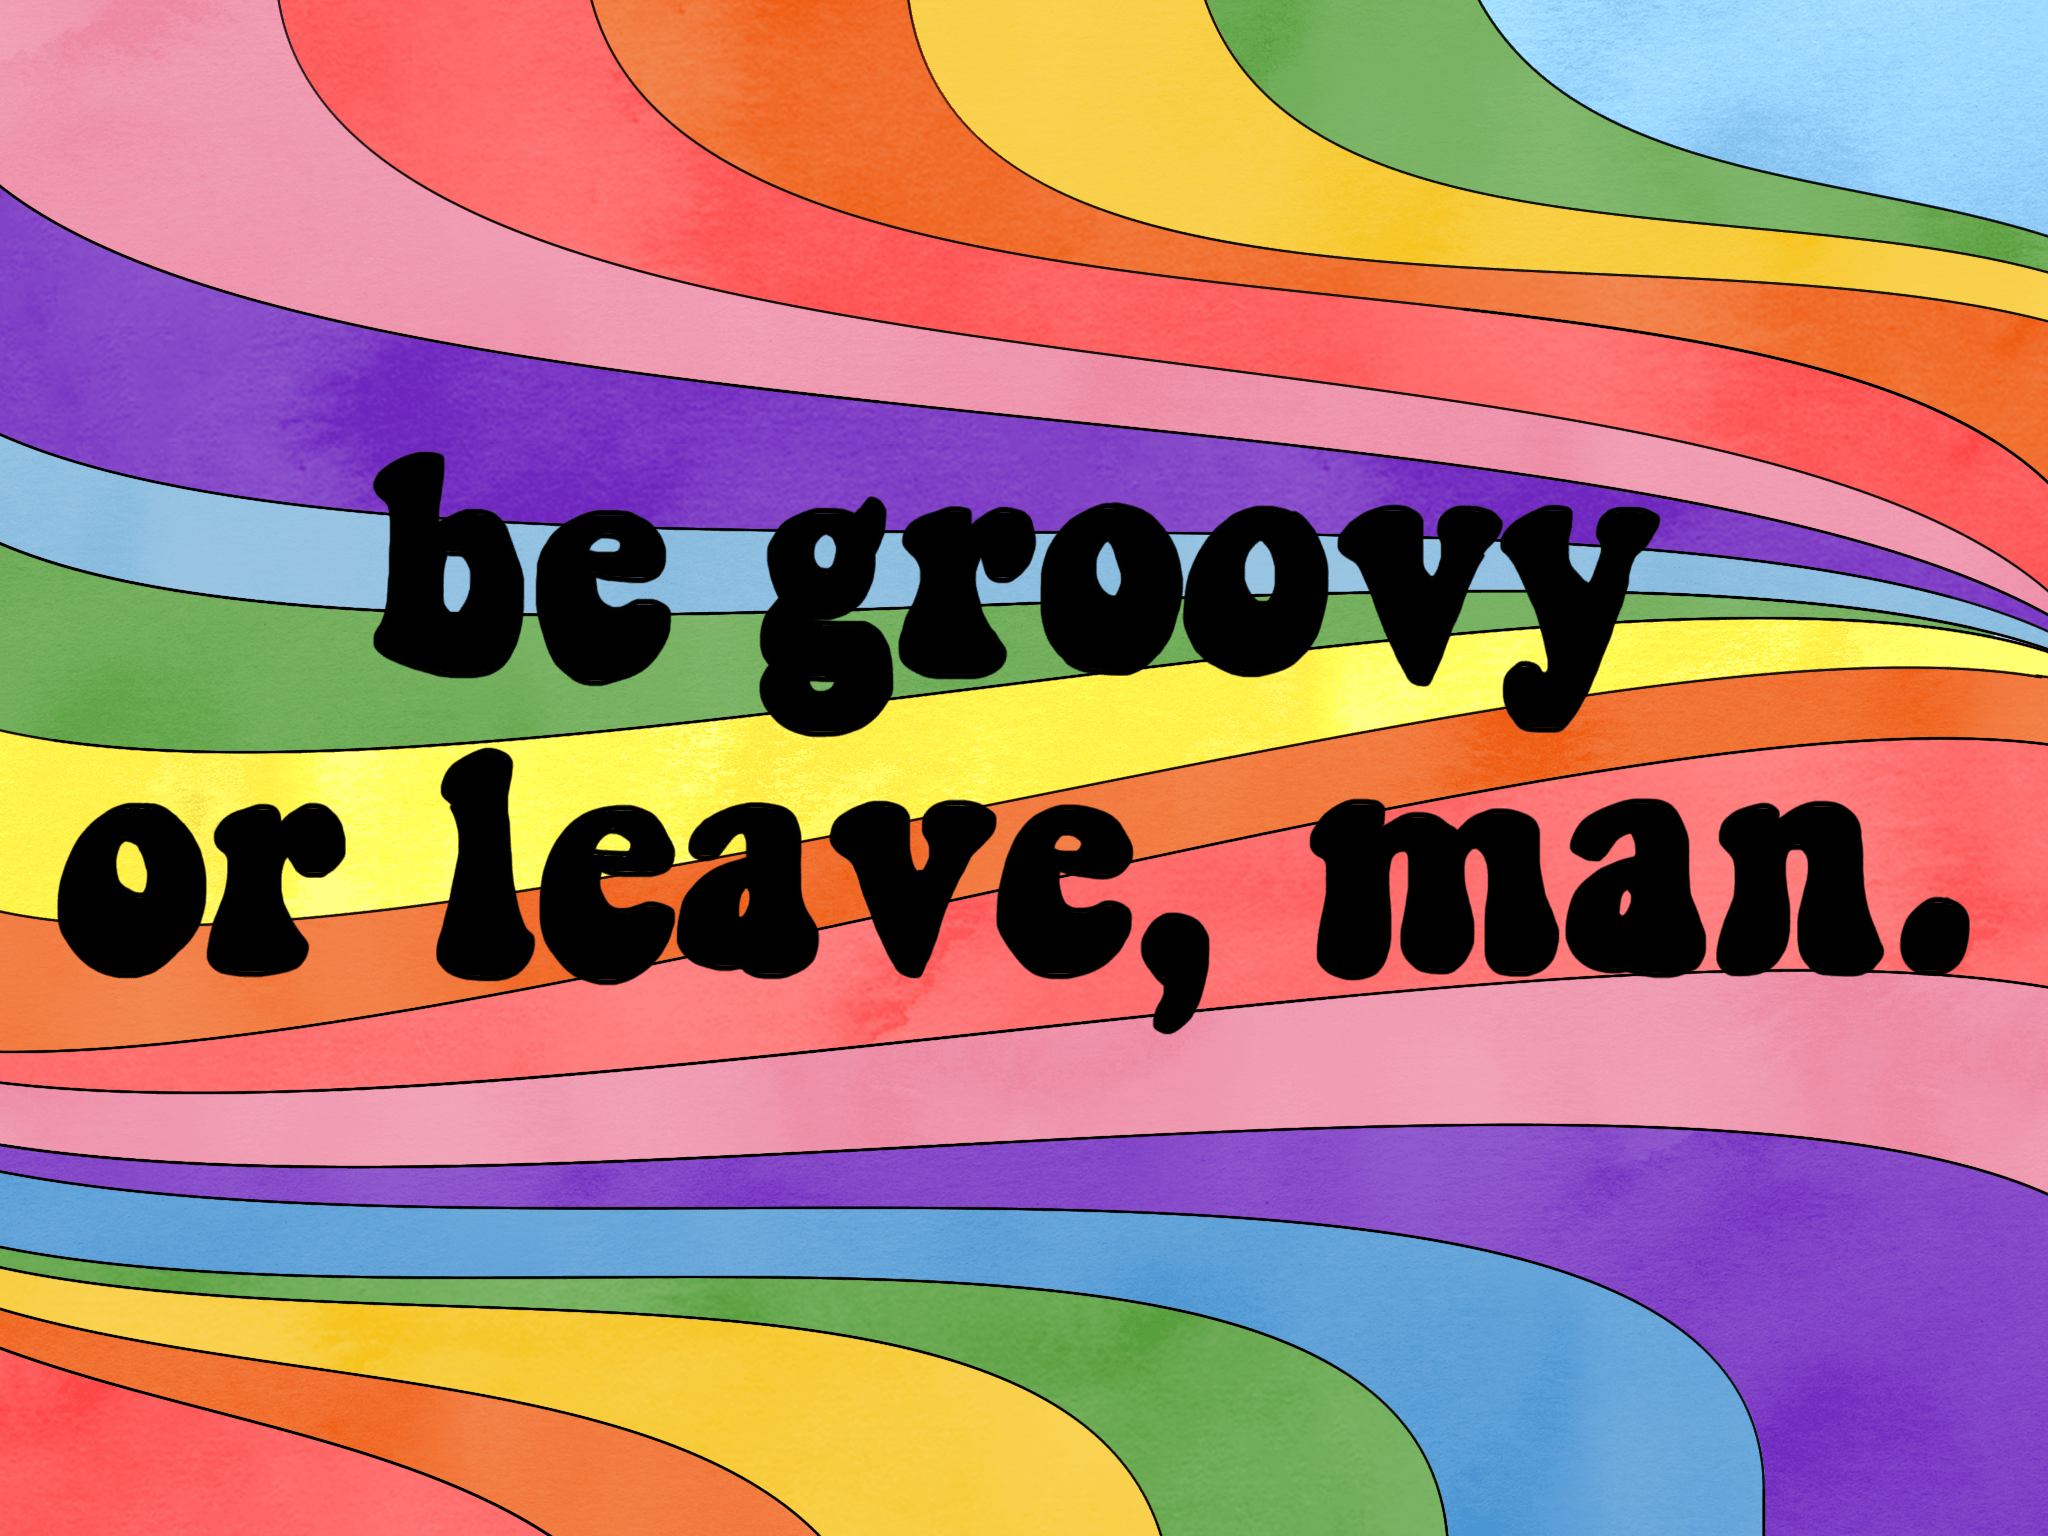 Groovy or leave, man. - Indie, trippy, 60s, retro, 70s